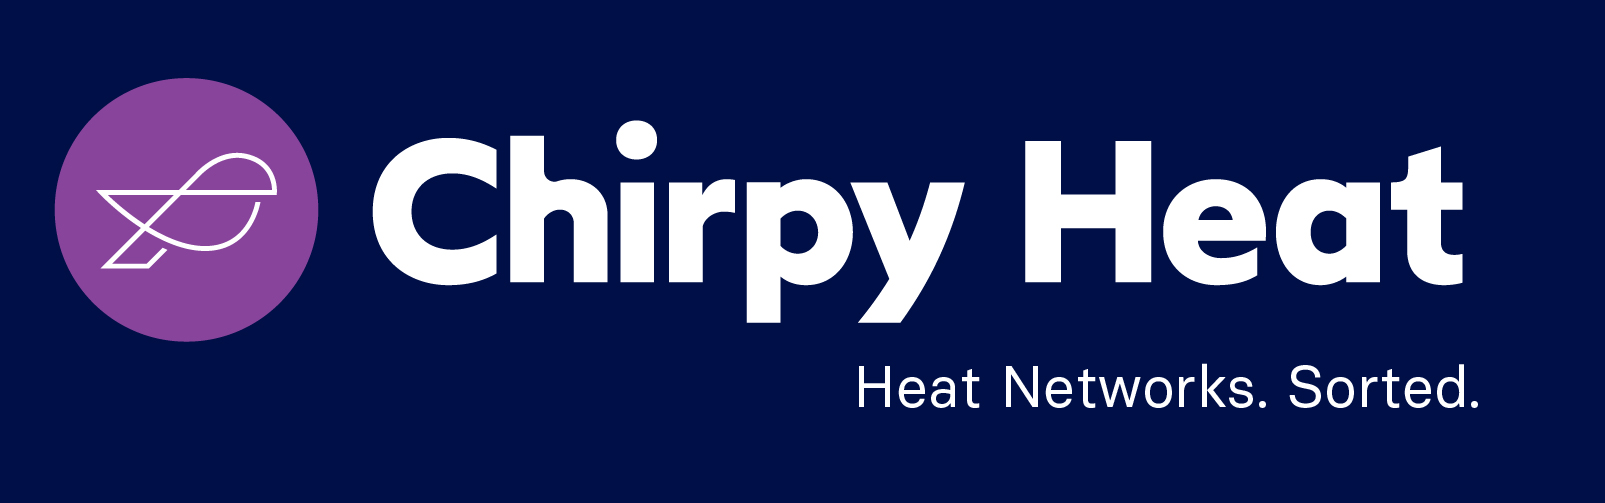 Chirpy Heat logo